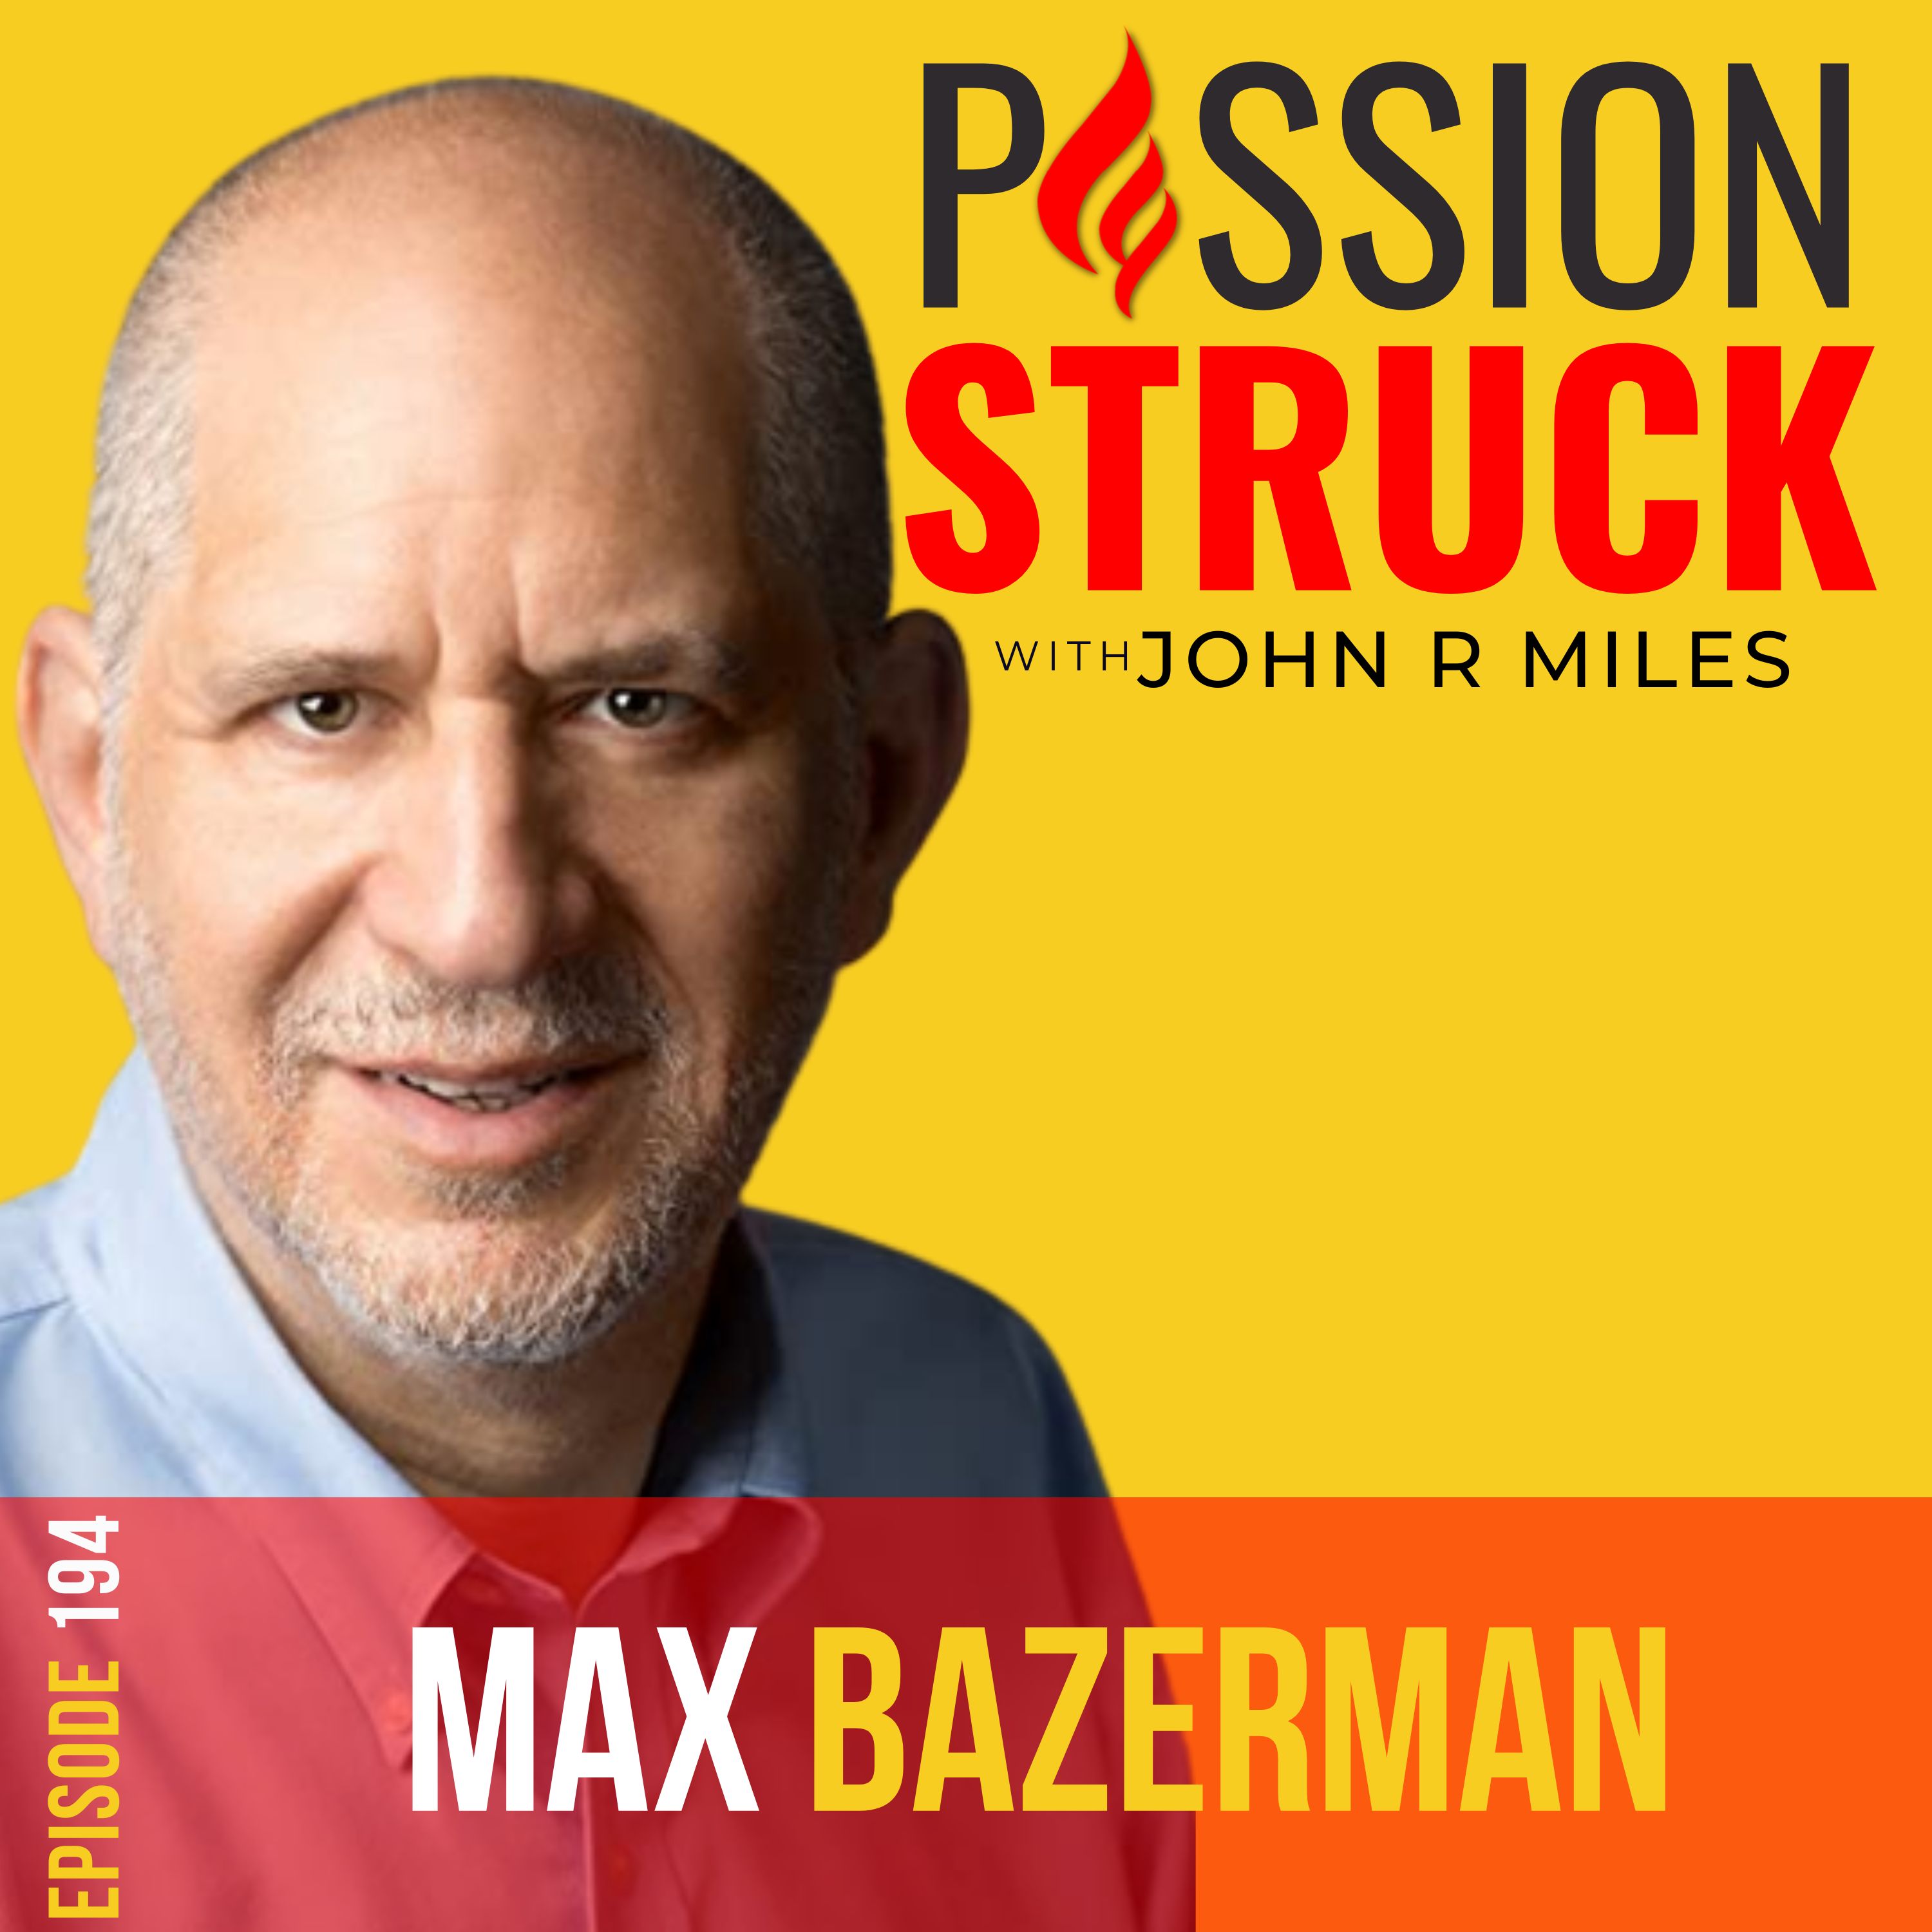 Passion Struck podcast album cover featuring Max Bazerman